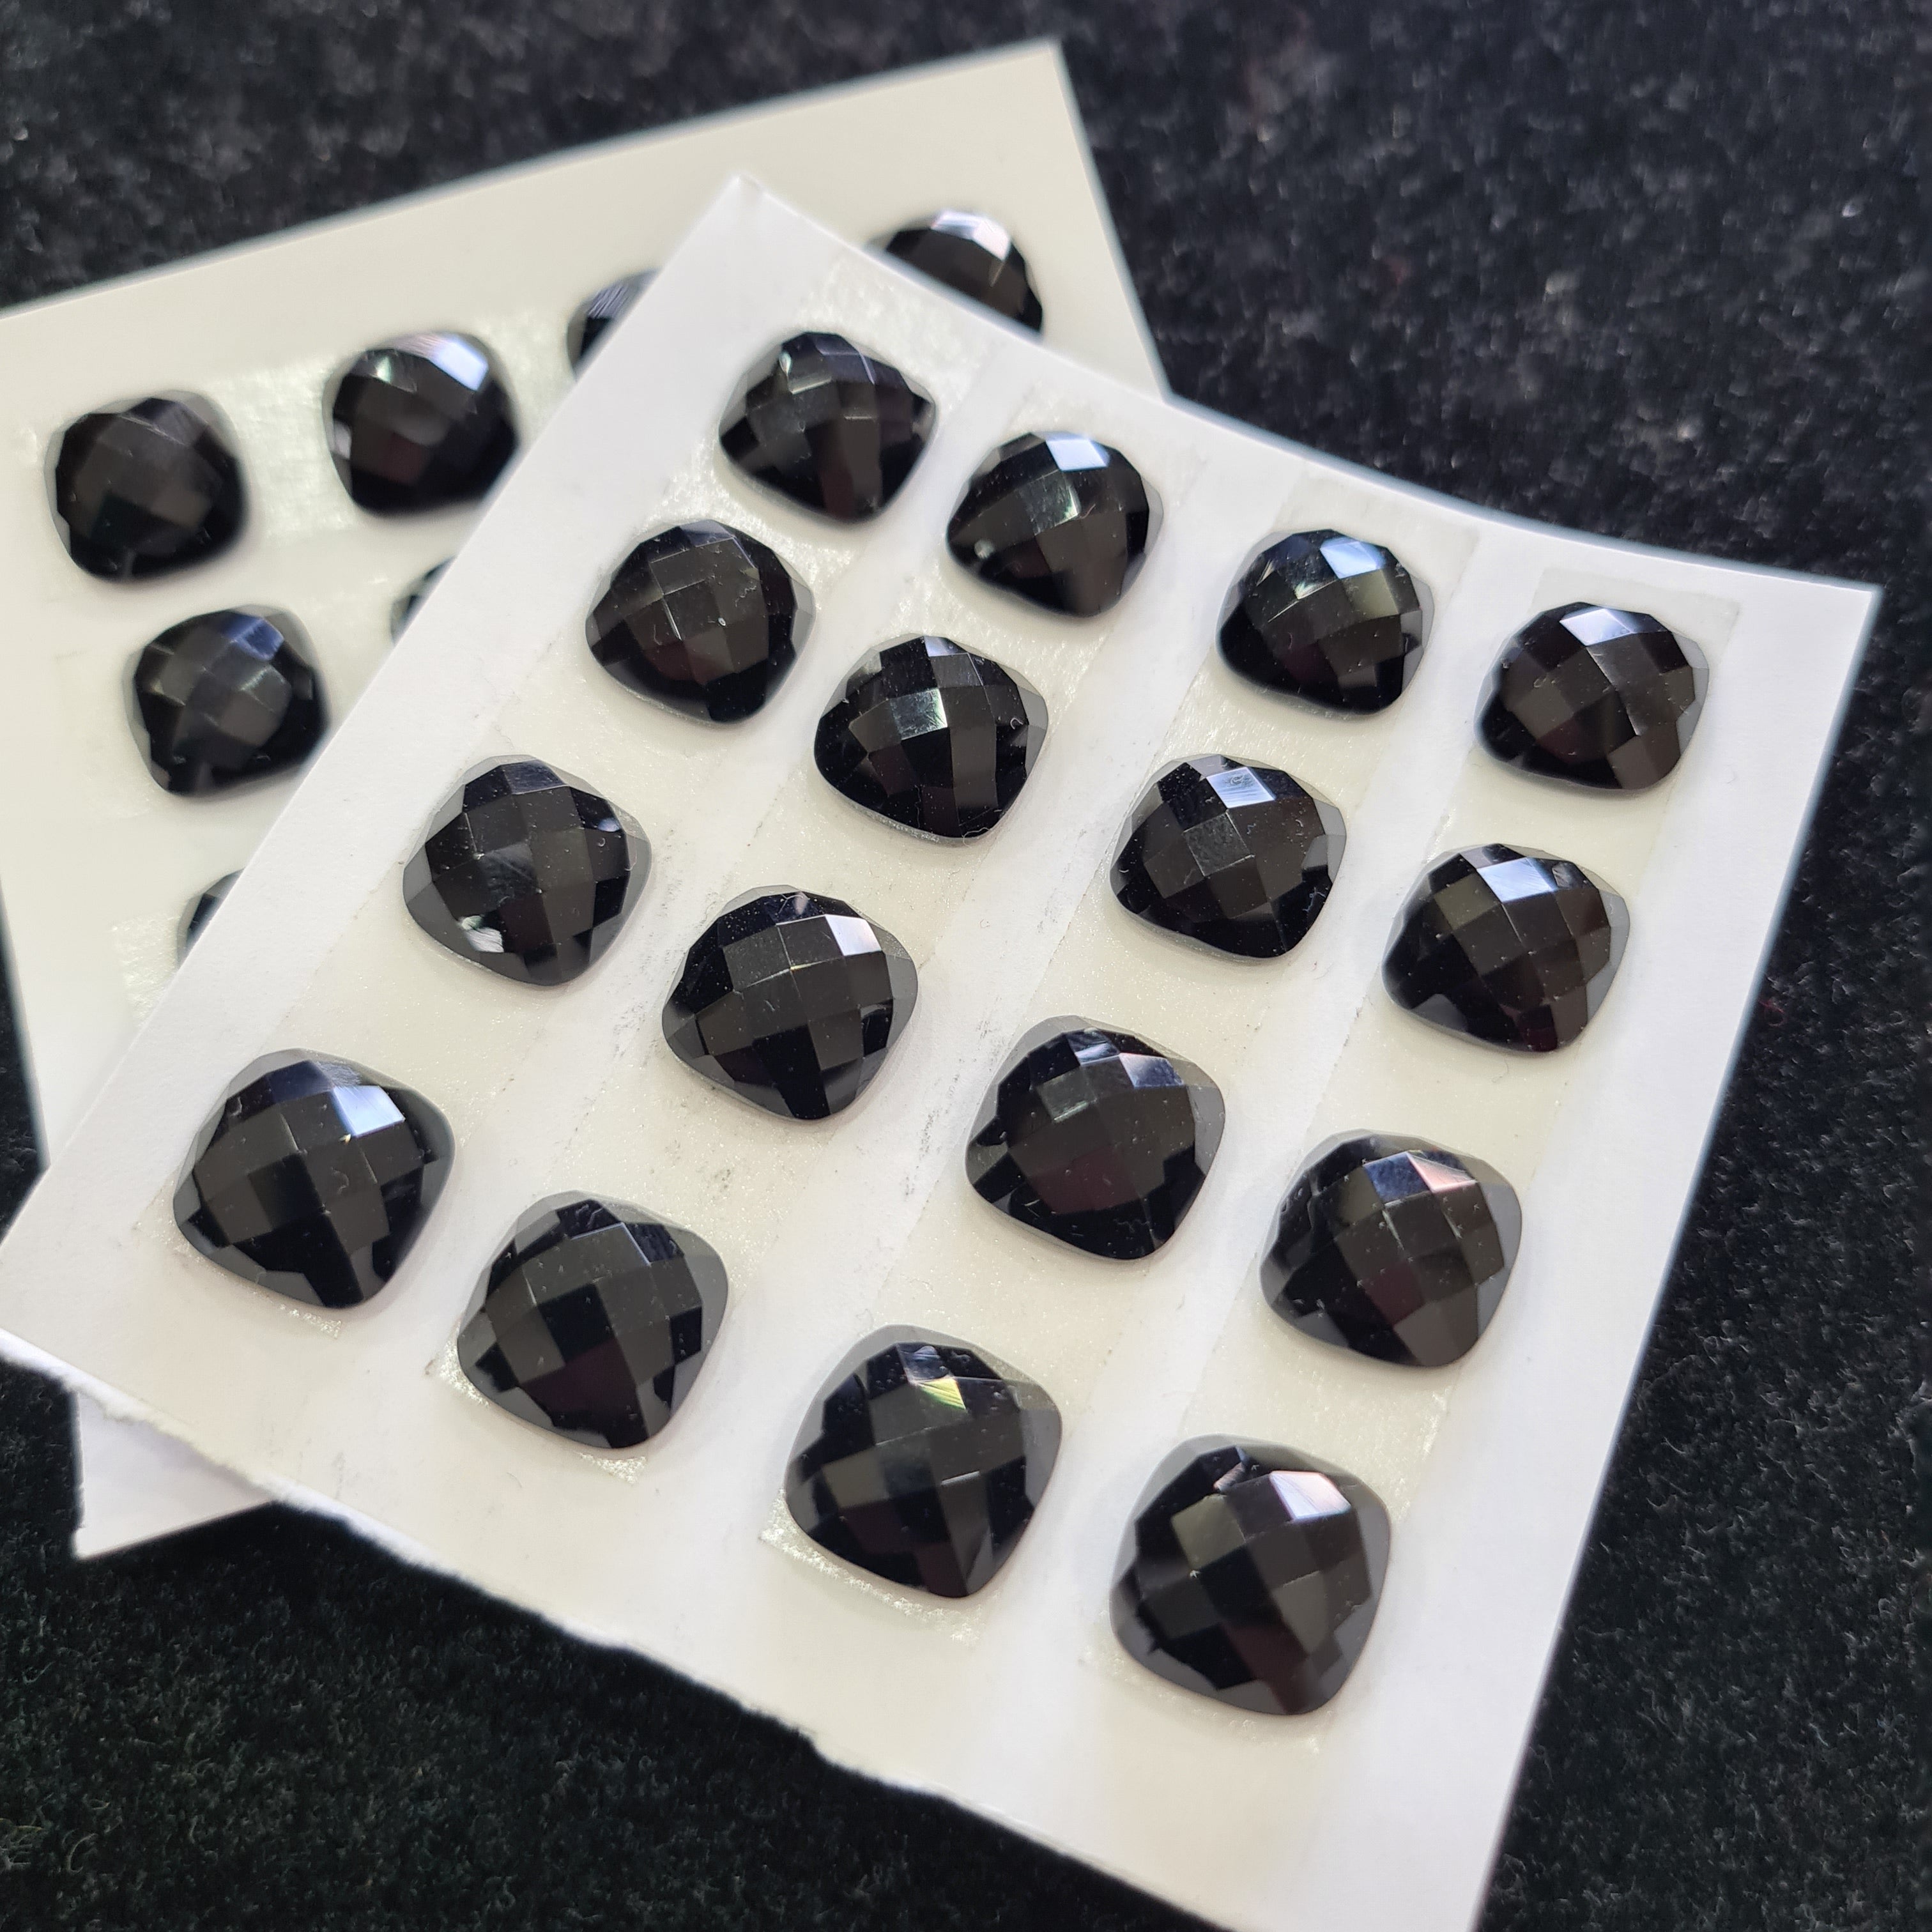 2Unit, 32Pcs Natural Black Onyx Rosecut Gemstones | Square Shape, 12mm Size, - The LabradoriteKing